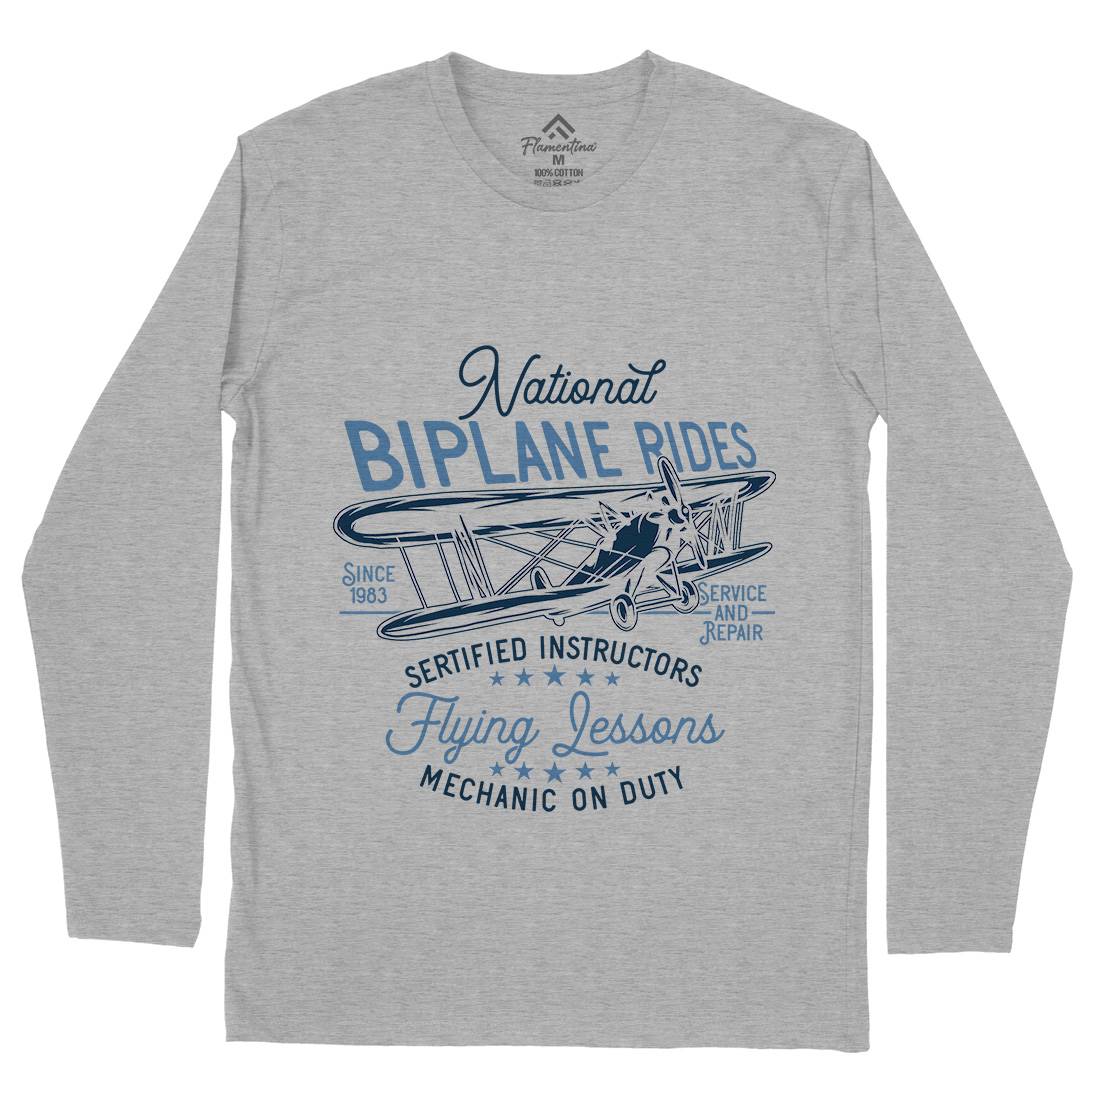 Biplane Rides Mens Long Sleeve T-Shirt Vehicles D910